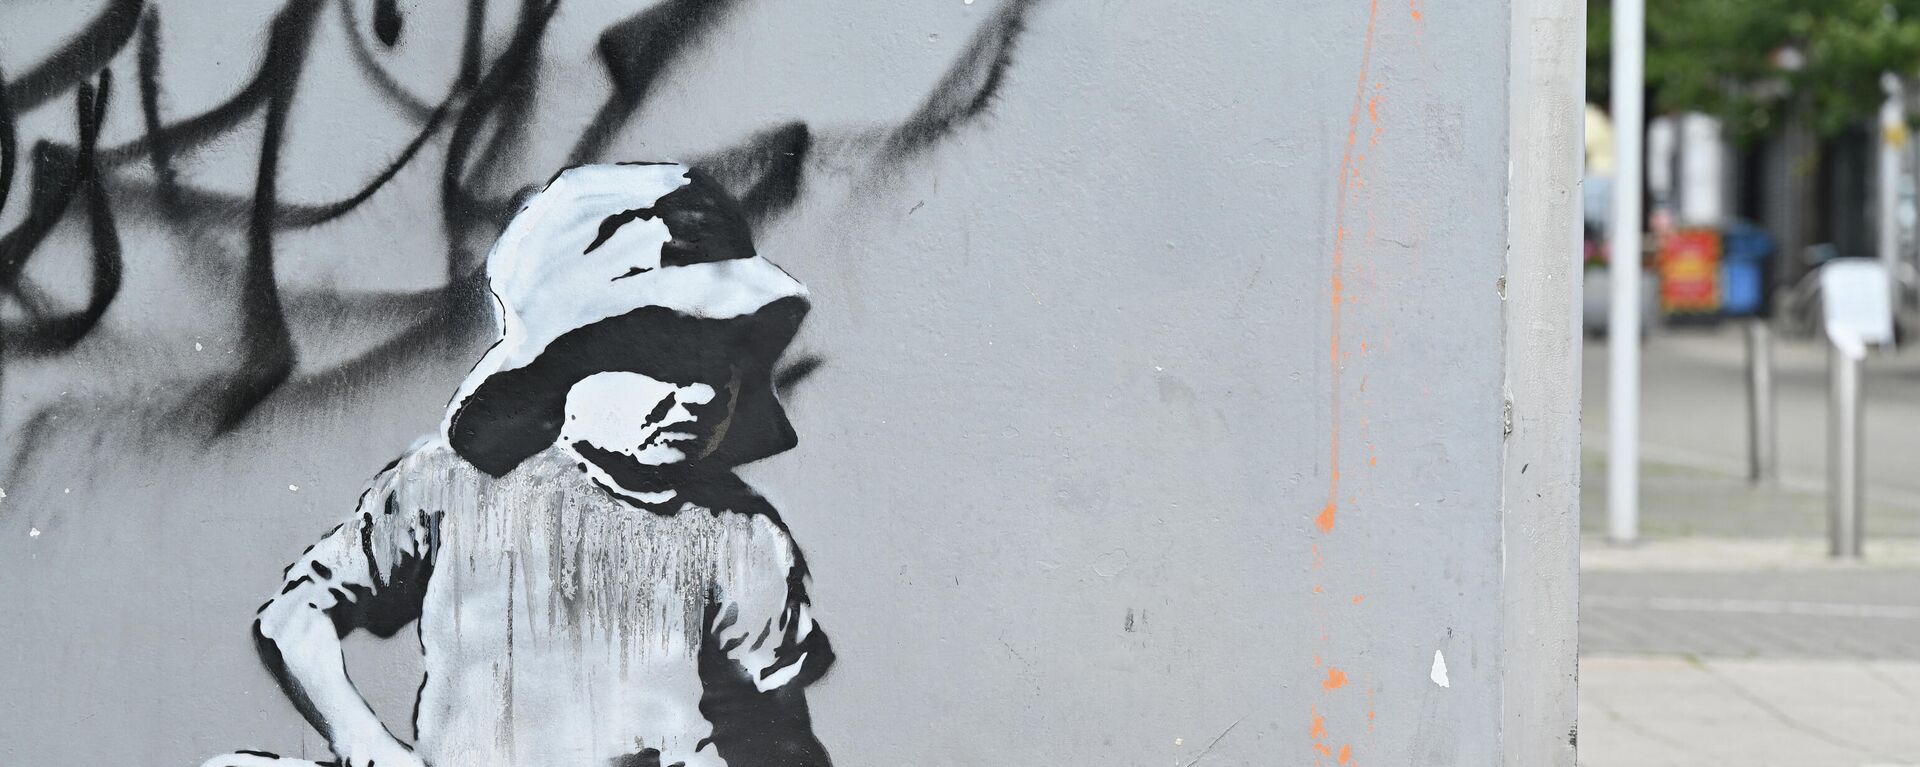 Gatvės menininko Banksy grafičiai Lowestoft, Anglijoje  - Sputnik Lietuva, 1920, 23.01.2022